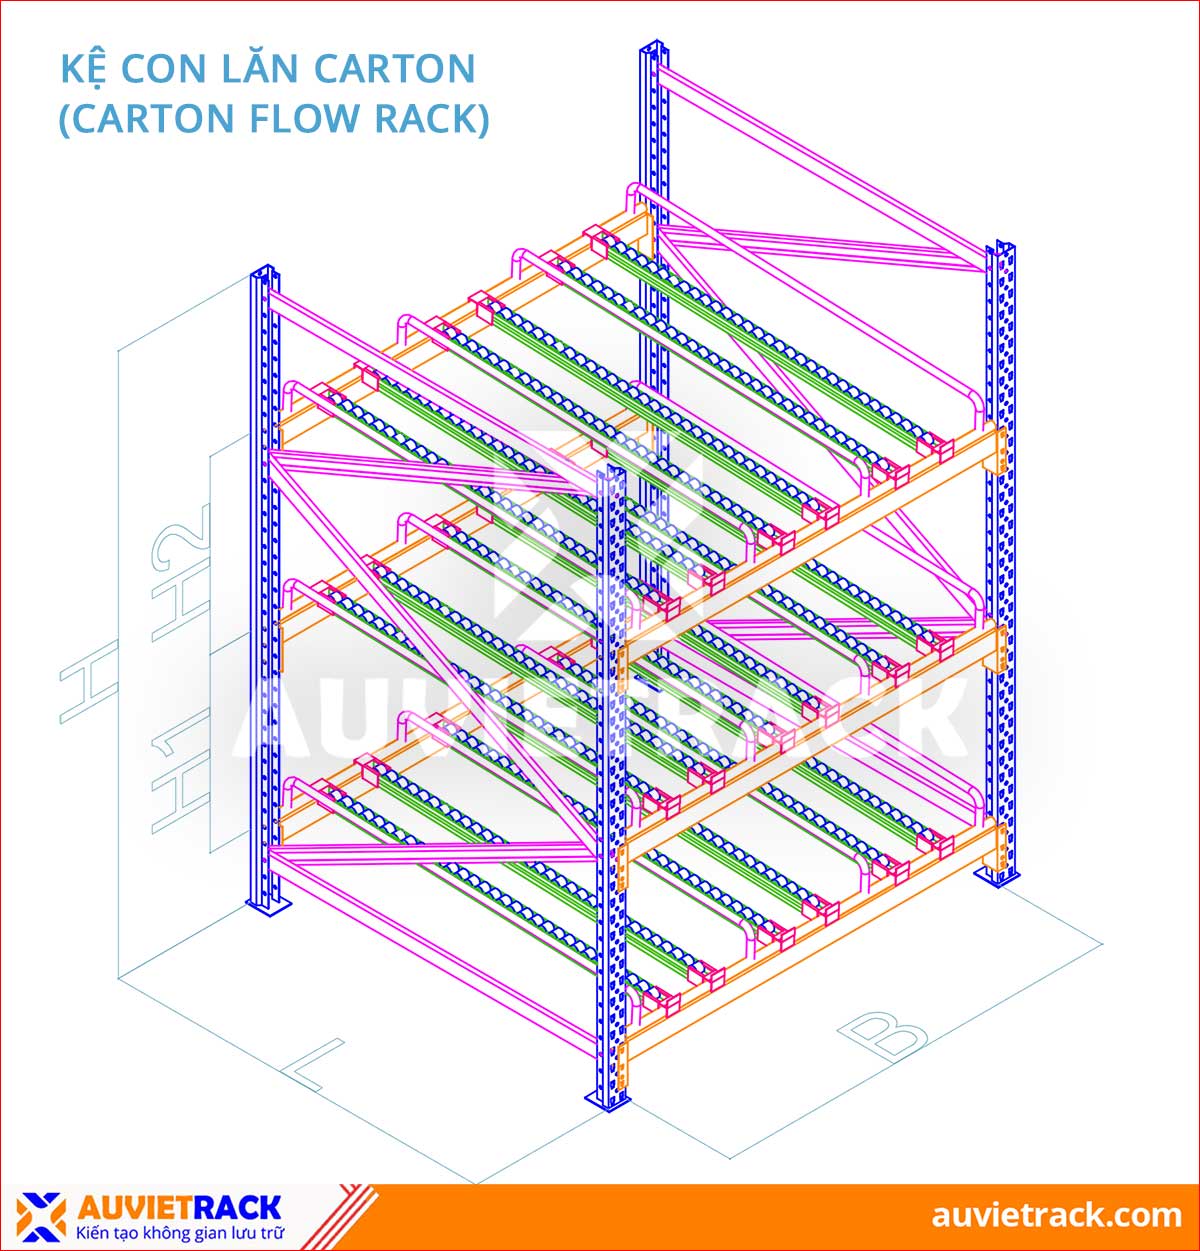 Structure of carton flow rack